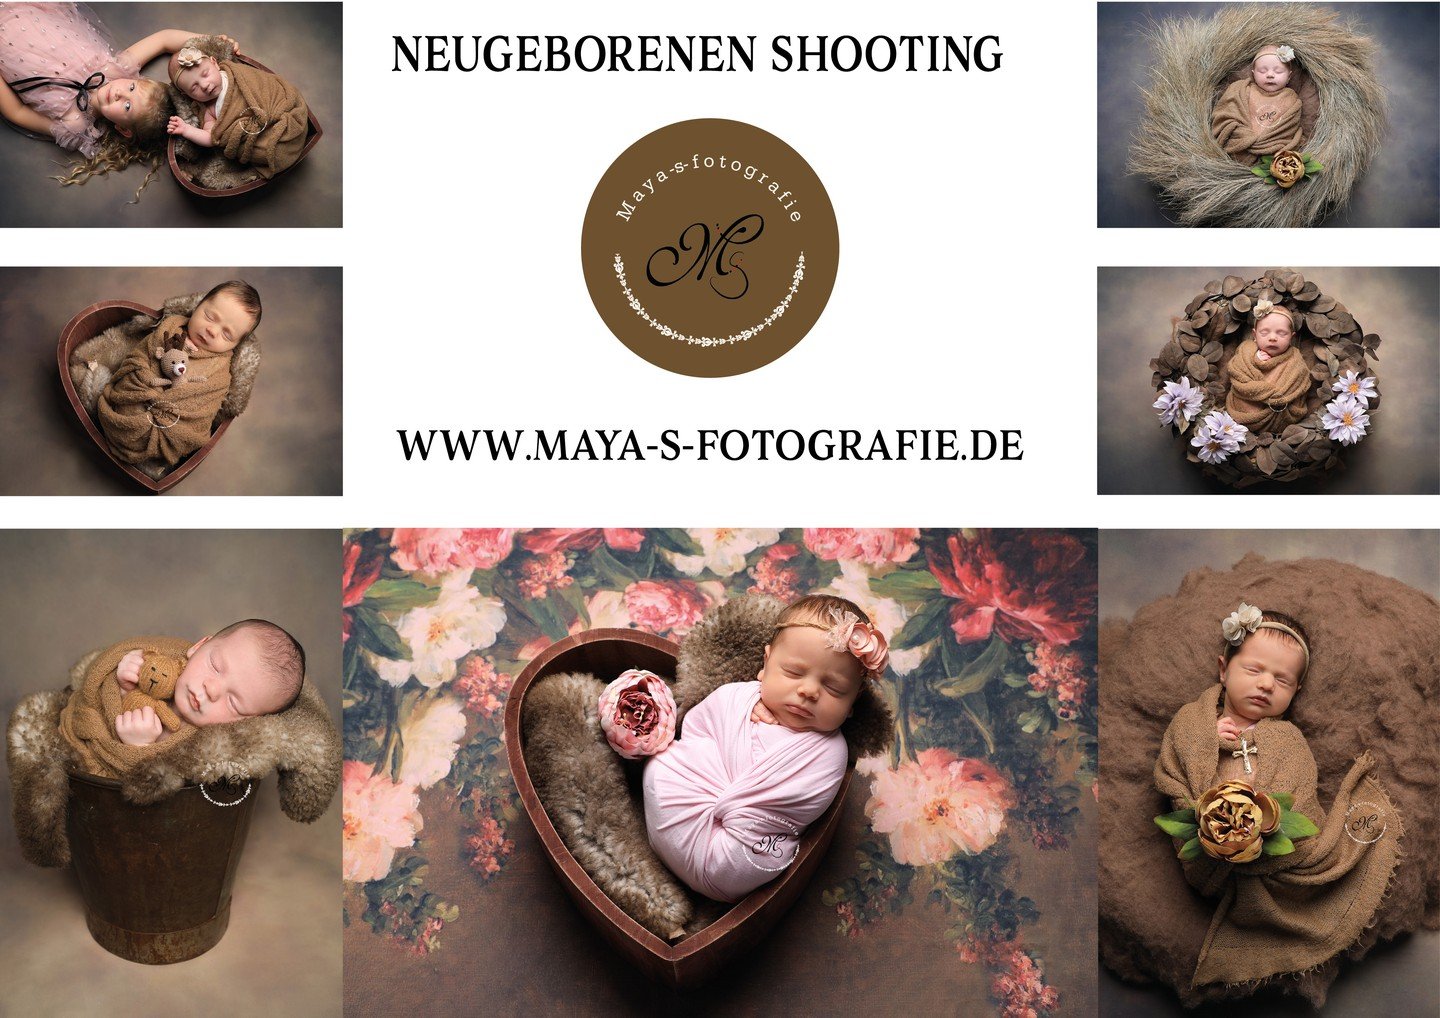 Neugeborenen Shooting bei Maya-S-Fotografie